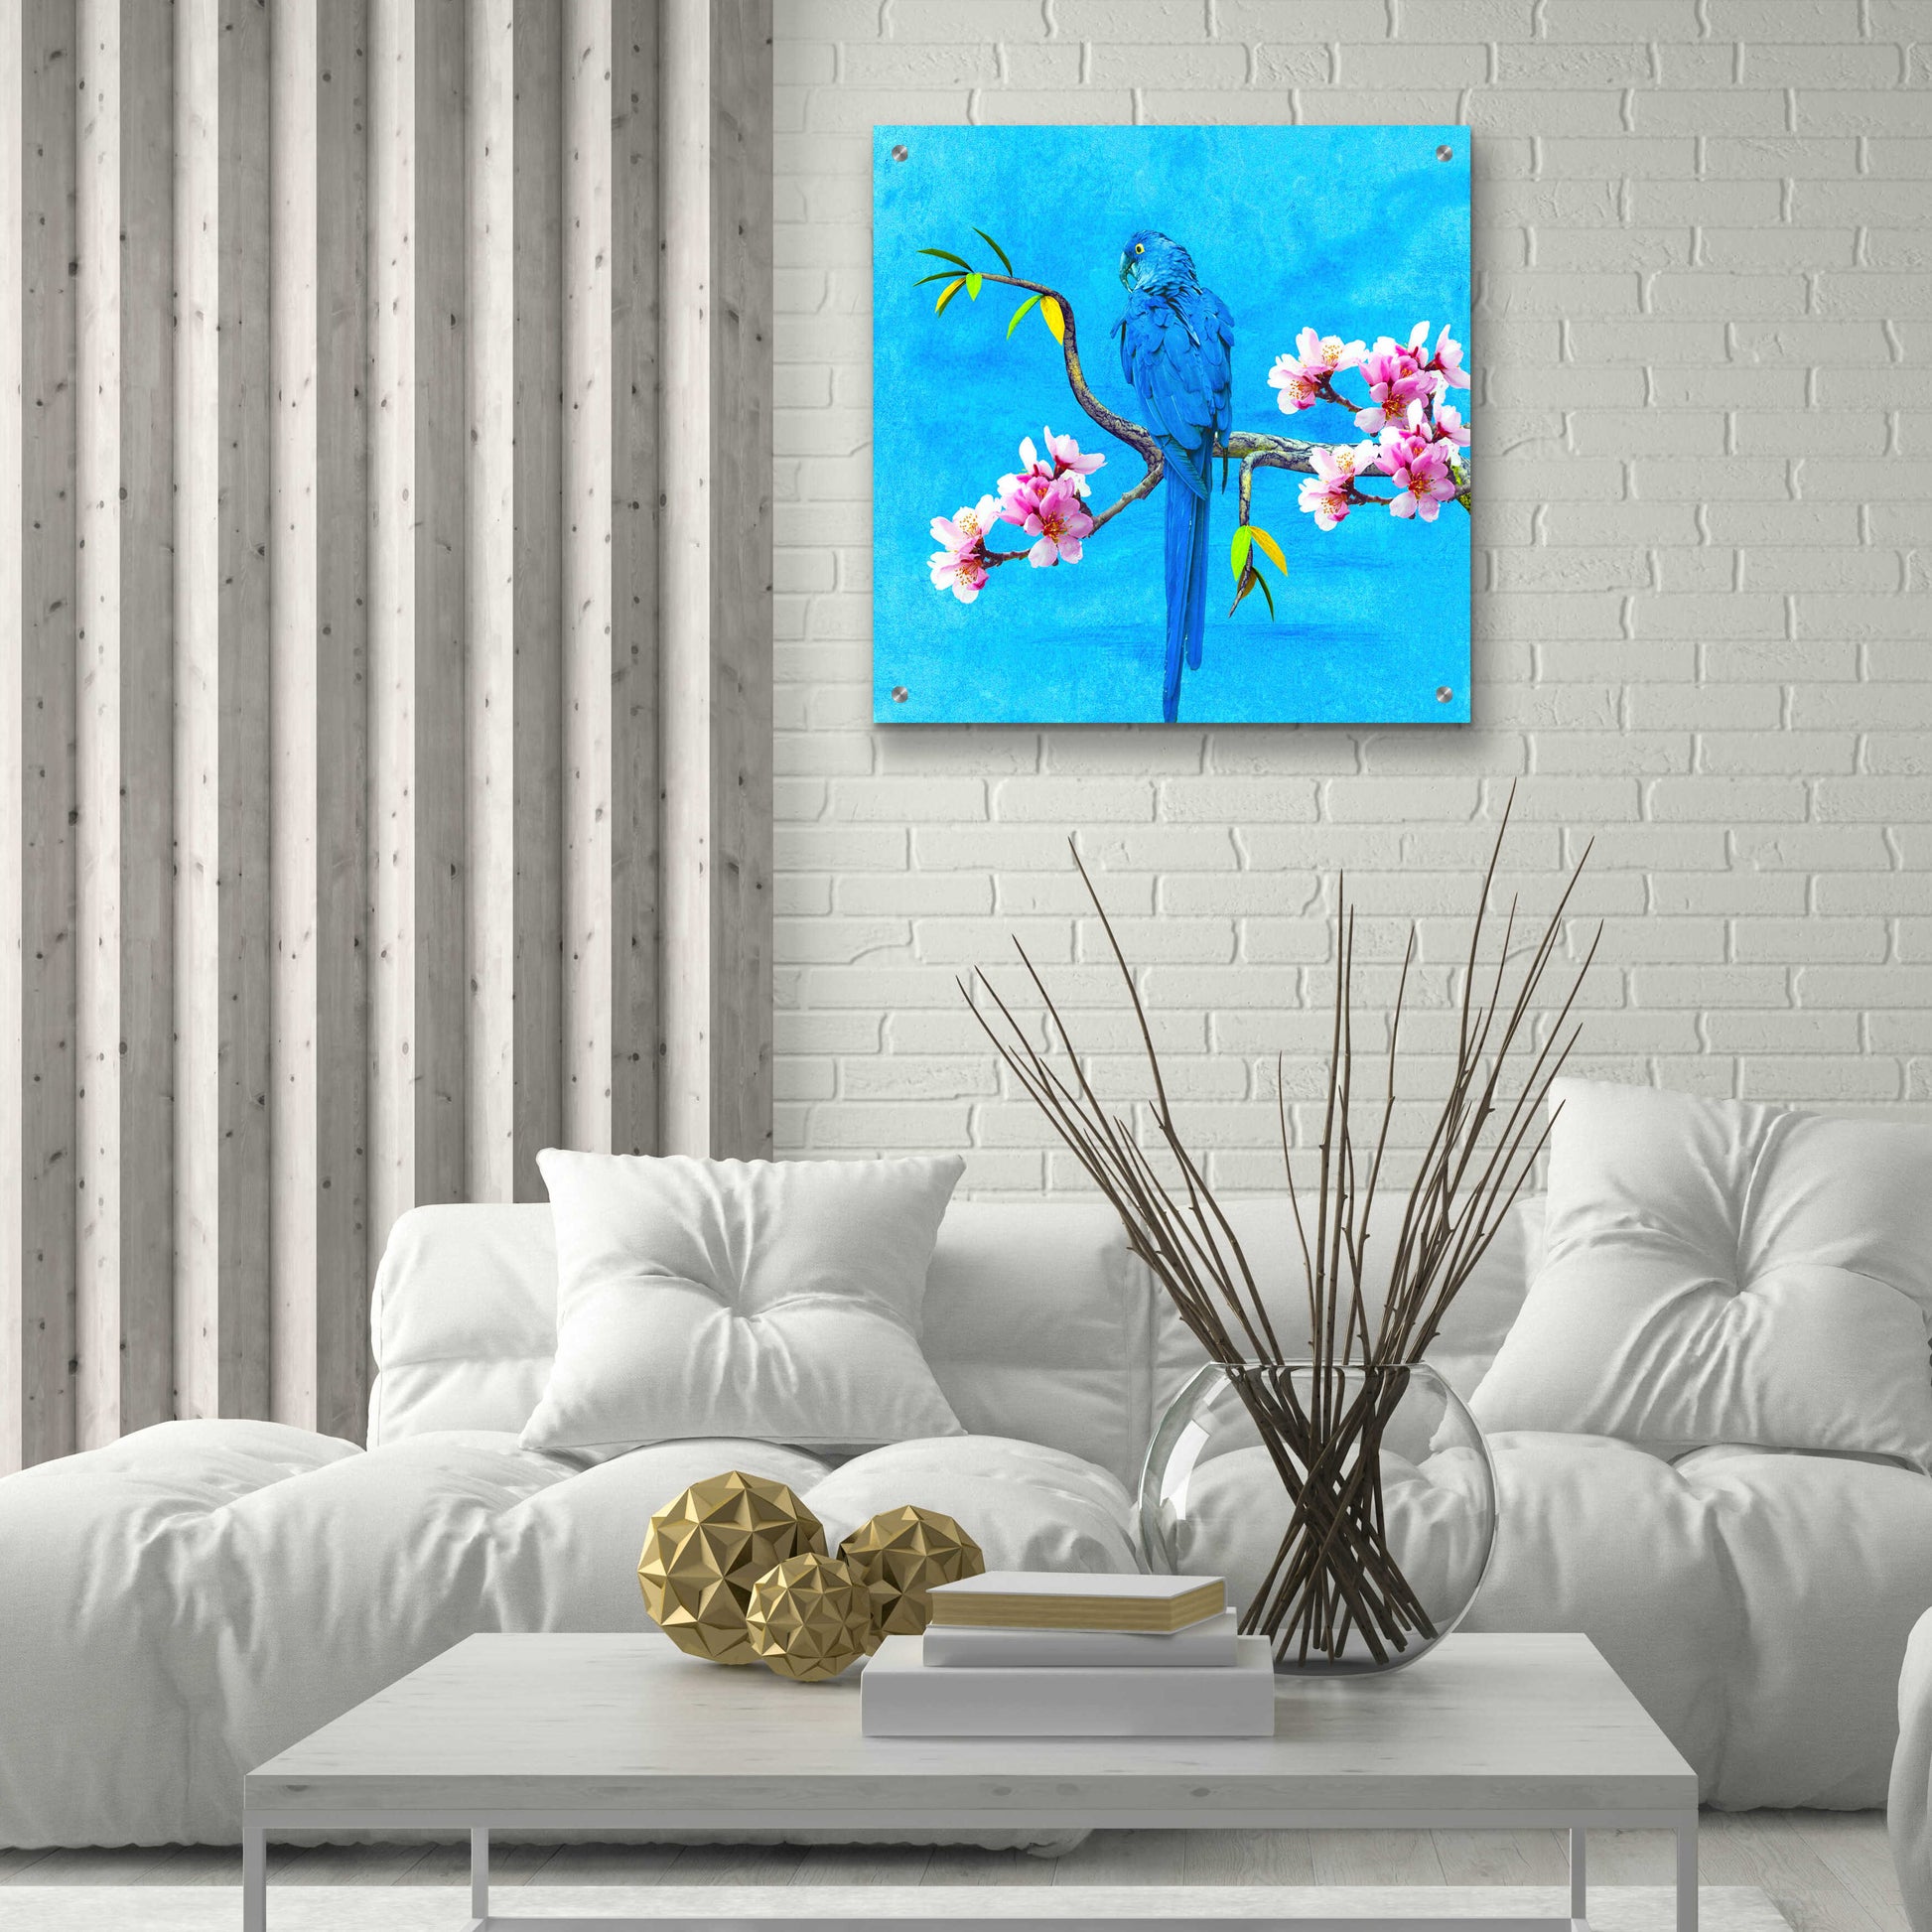 Epic Art 'Spring Bird And Flower' by Ata Alishahi, Acrylic Glass Wall Art,24x24